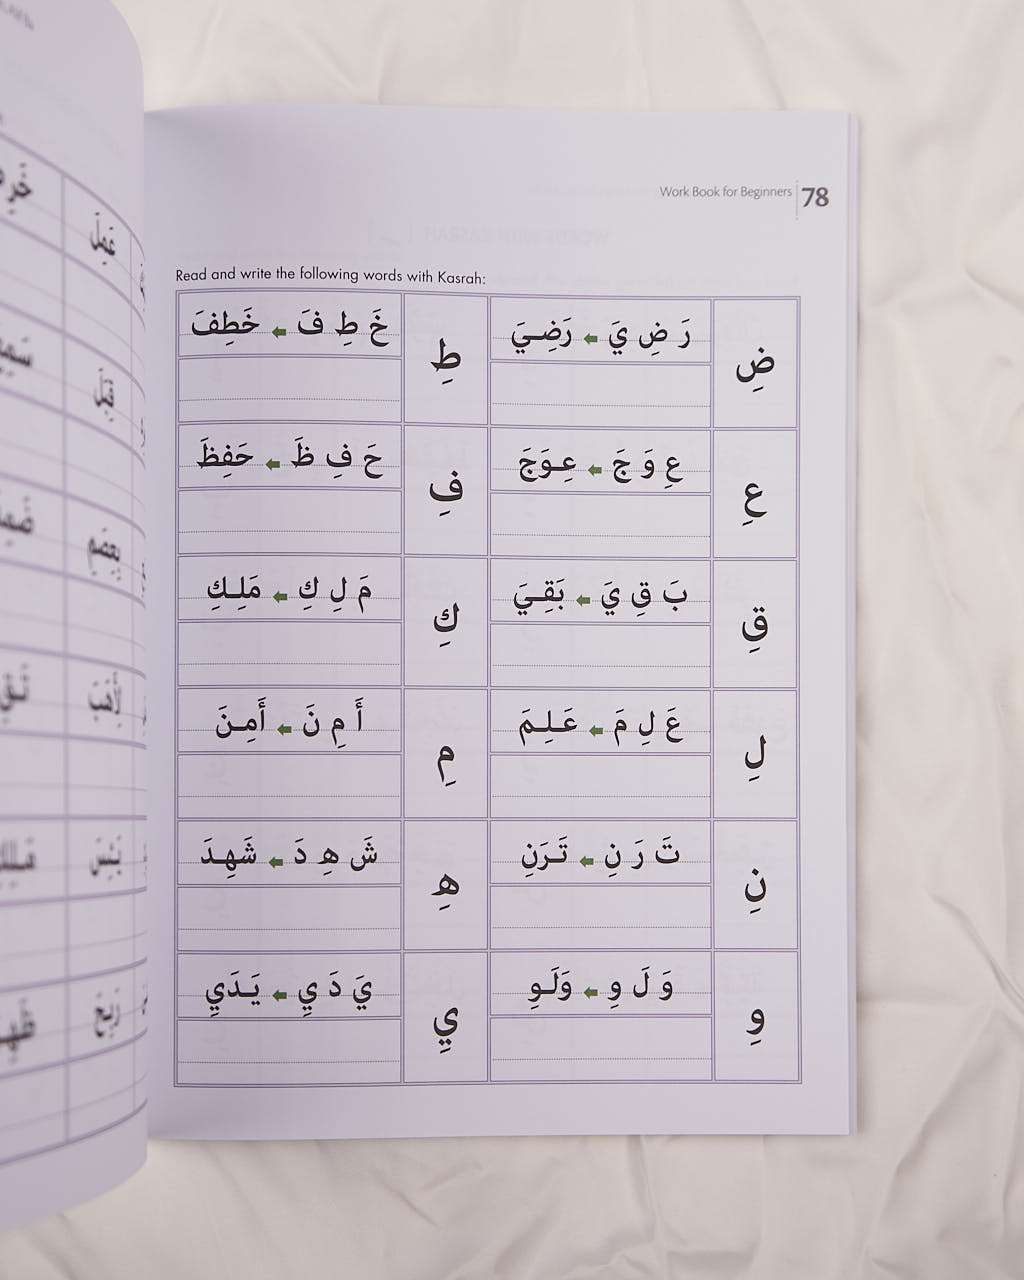 Arabic Writing and Reading Activity Book - Islamic Book - Fajr Noor